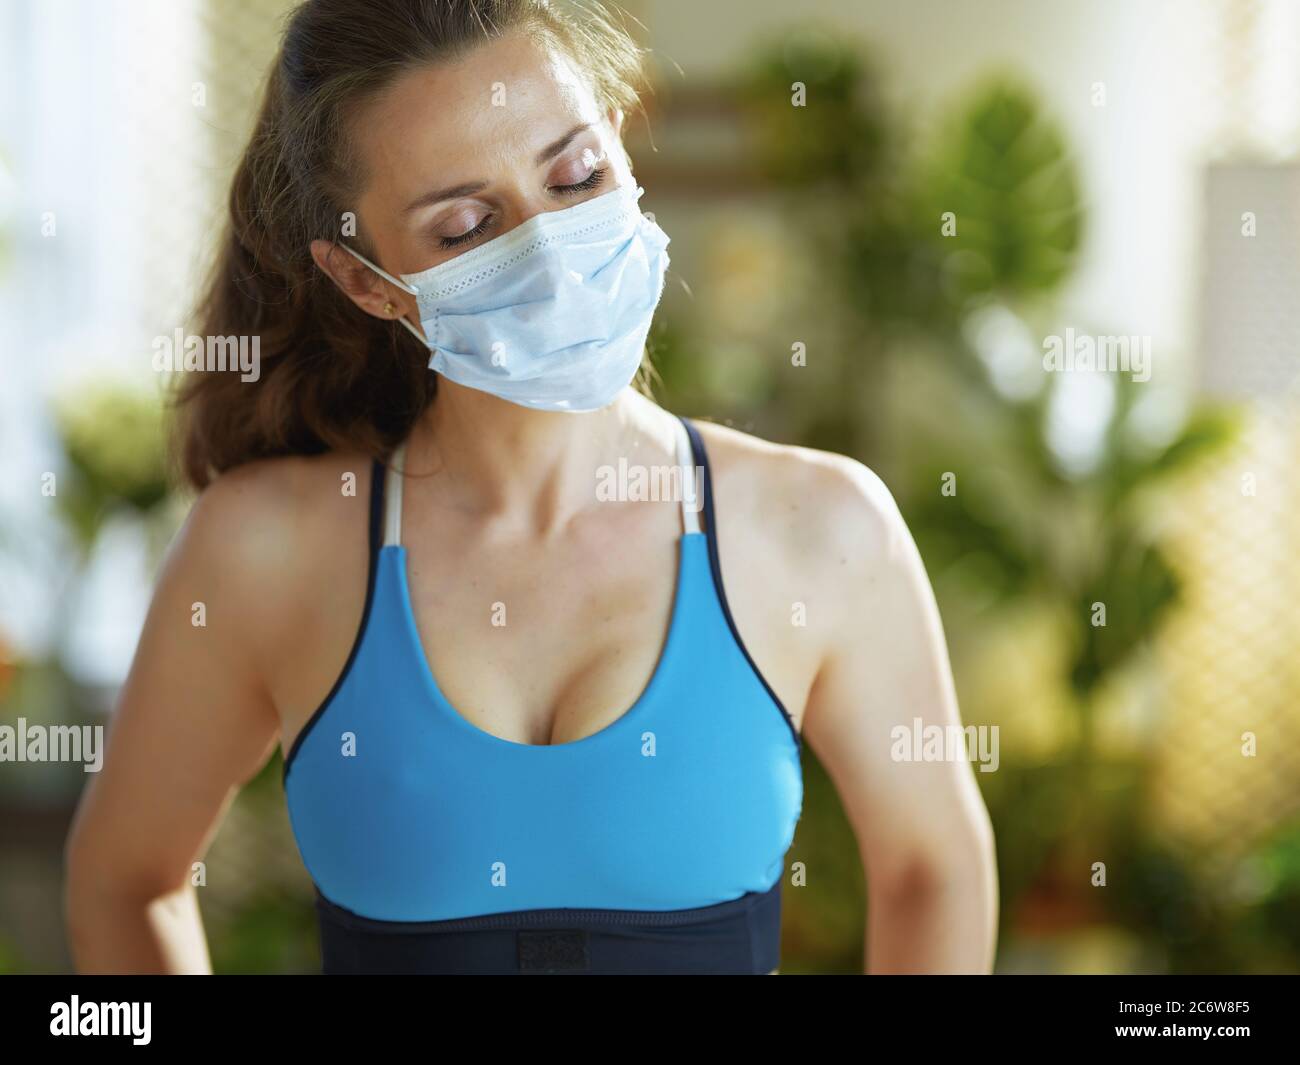 La vida durante la pandemia de covid-19. Mujer sana en ropa de fitness con mascarilla médica. Foto de stock